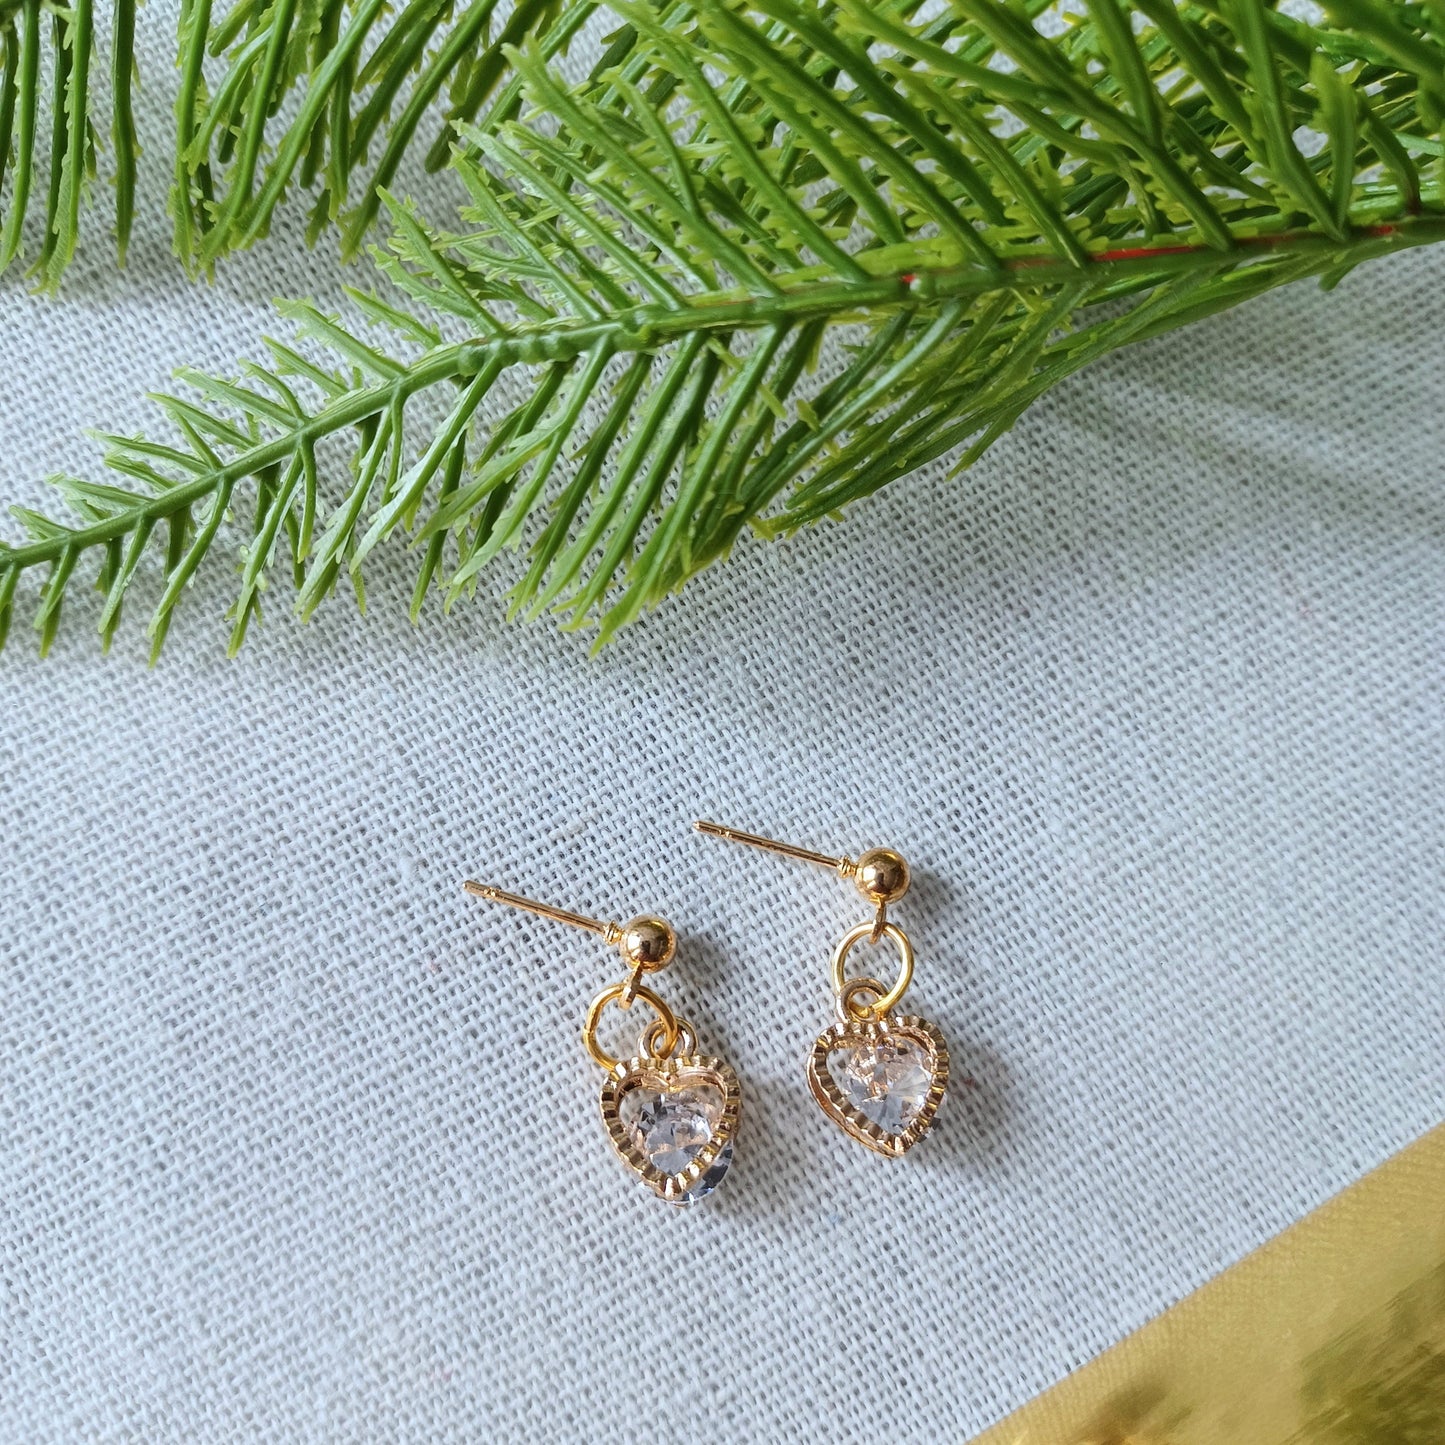 Boucles d'oreilles-Coeur en or/Gold heart-earrings